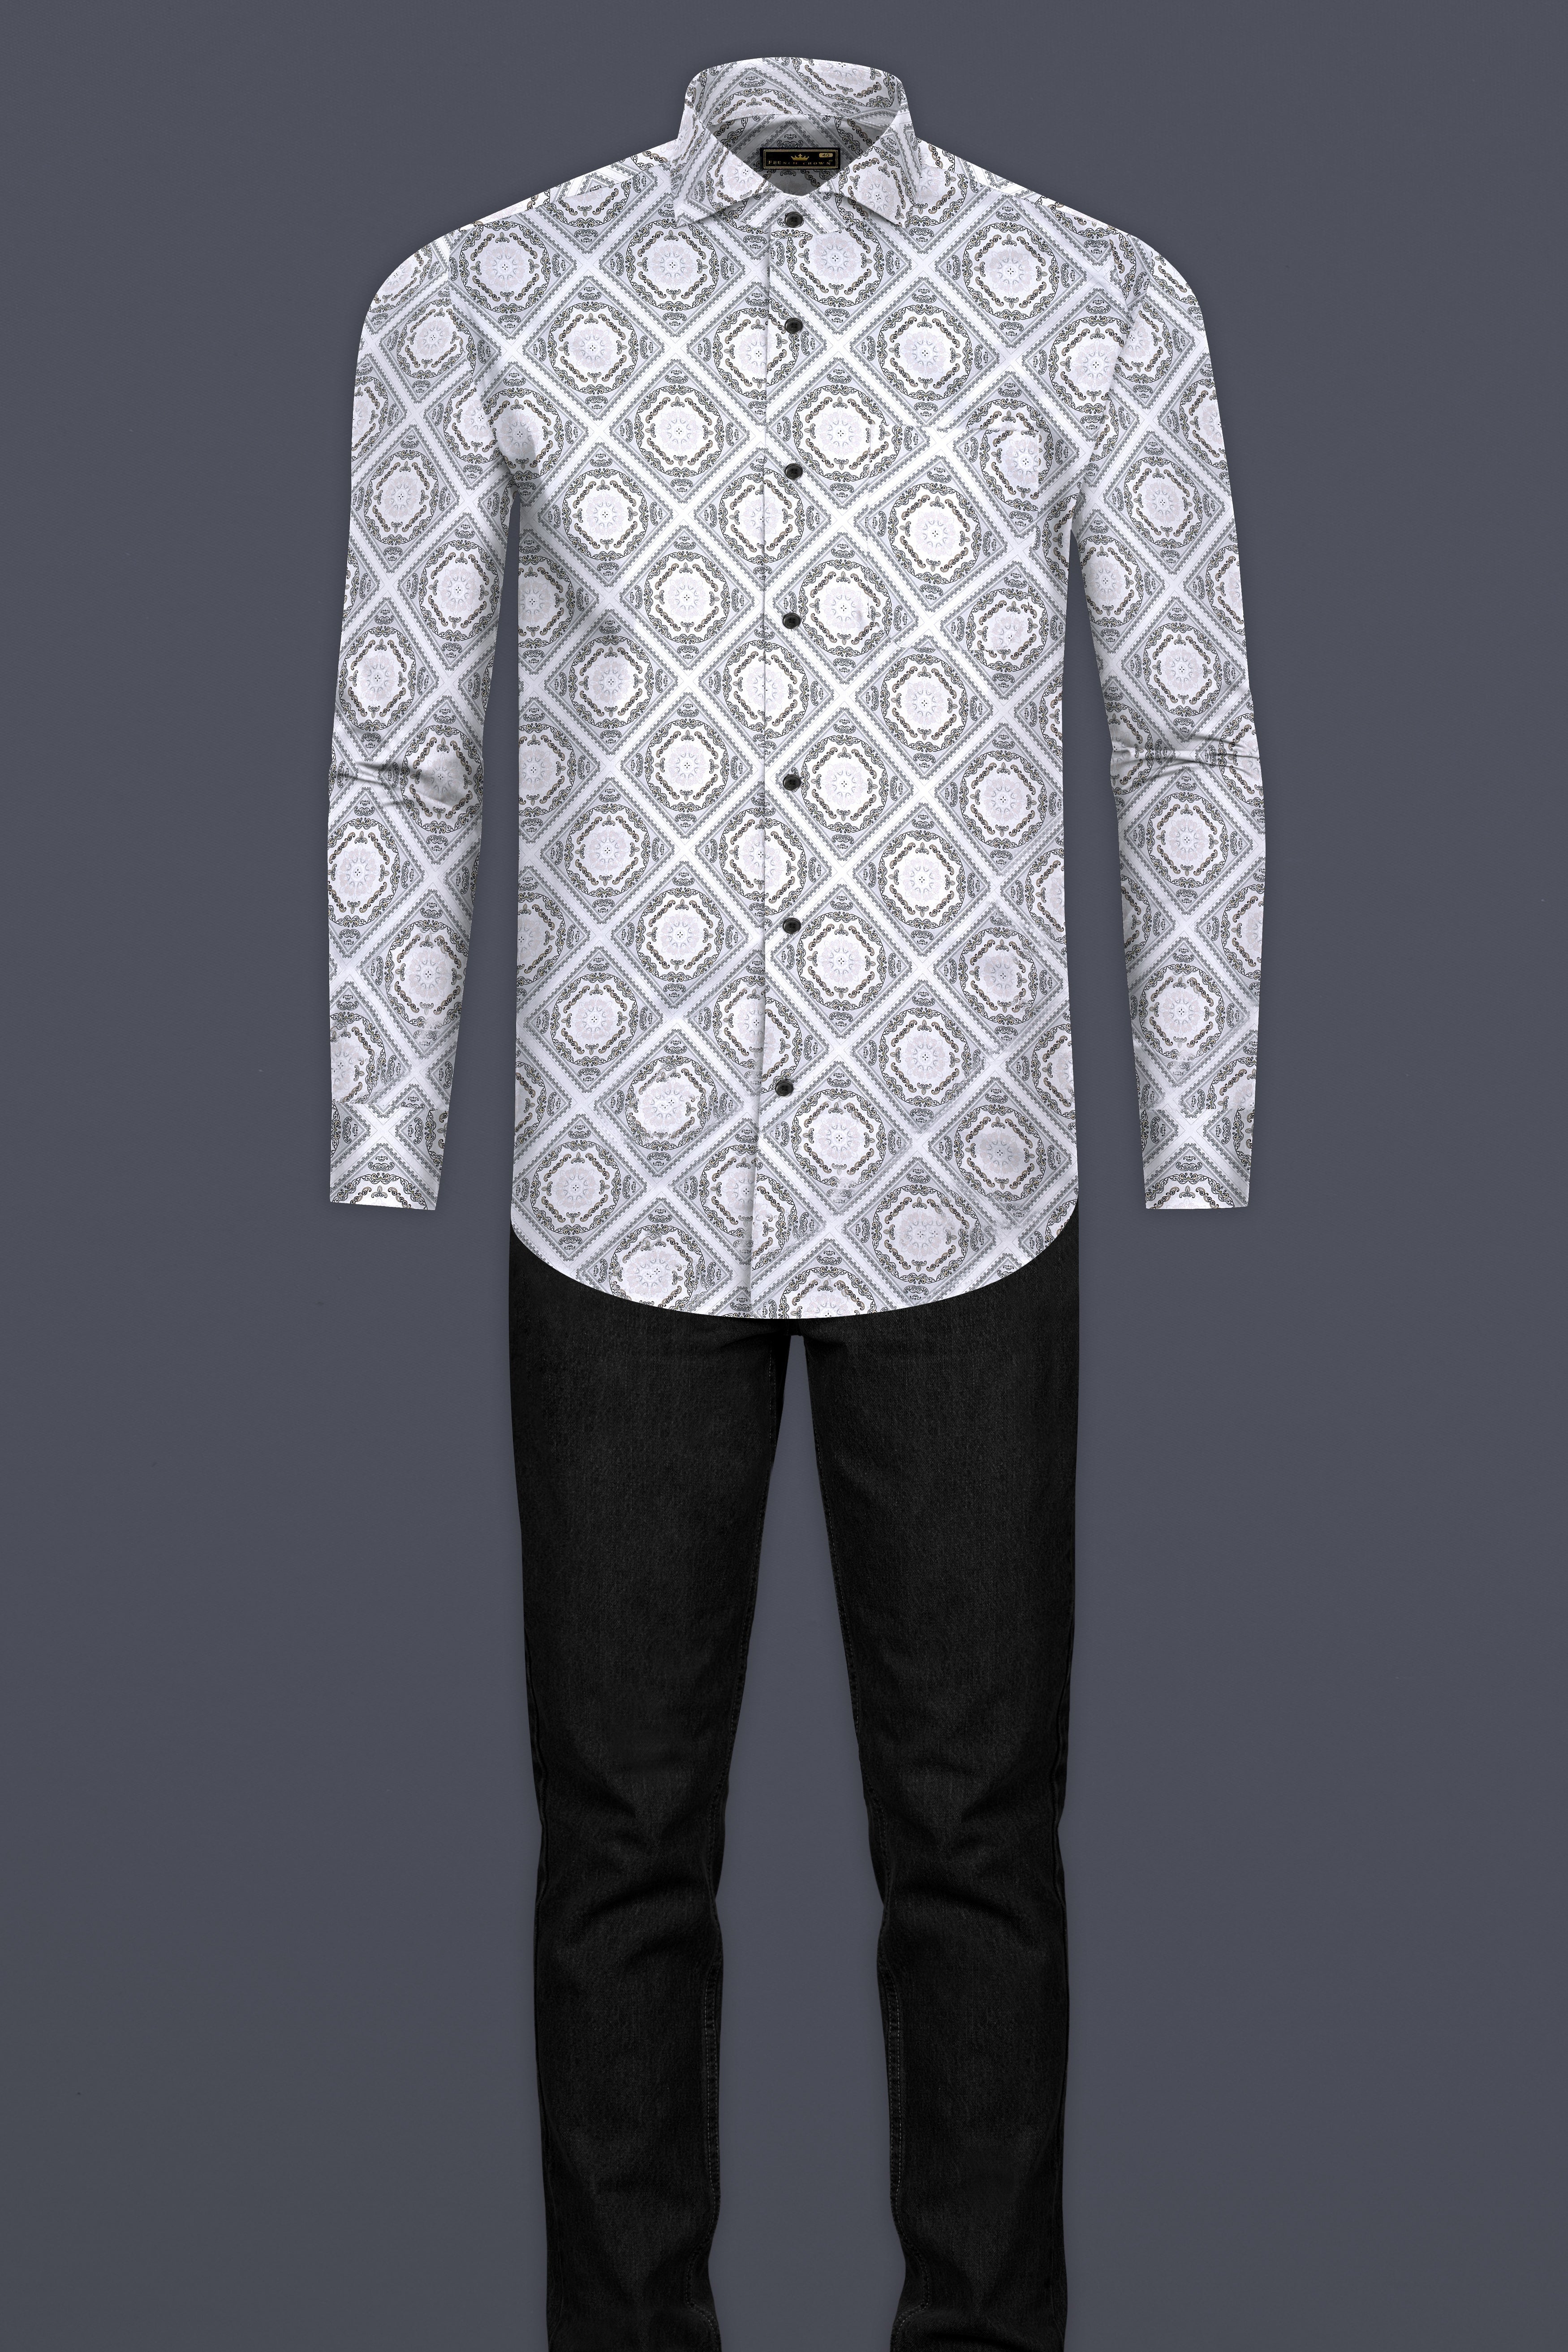 Bright White With Almond Cream Hexagon Printed Super Soft Premium Cotton Shirt